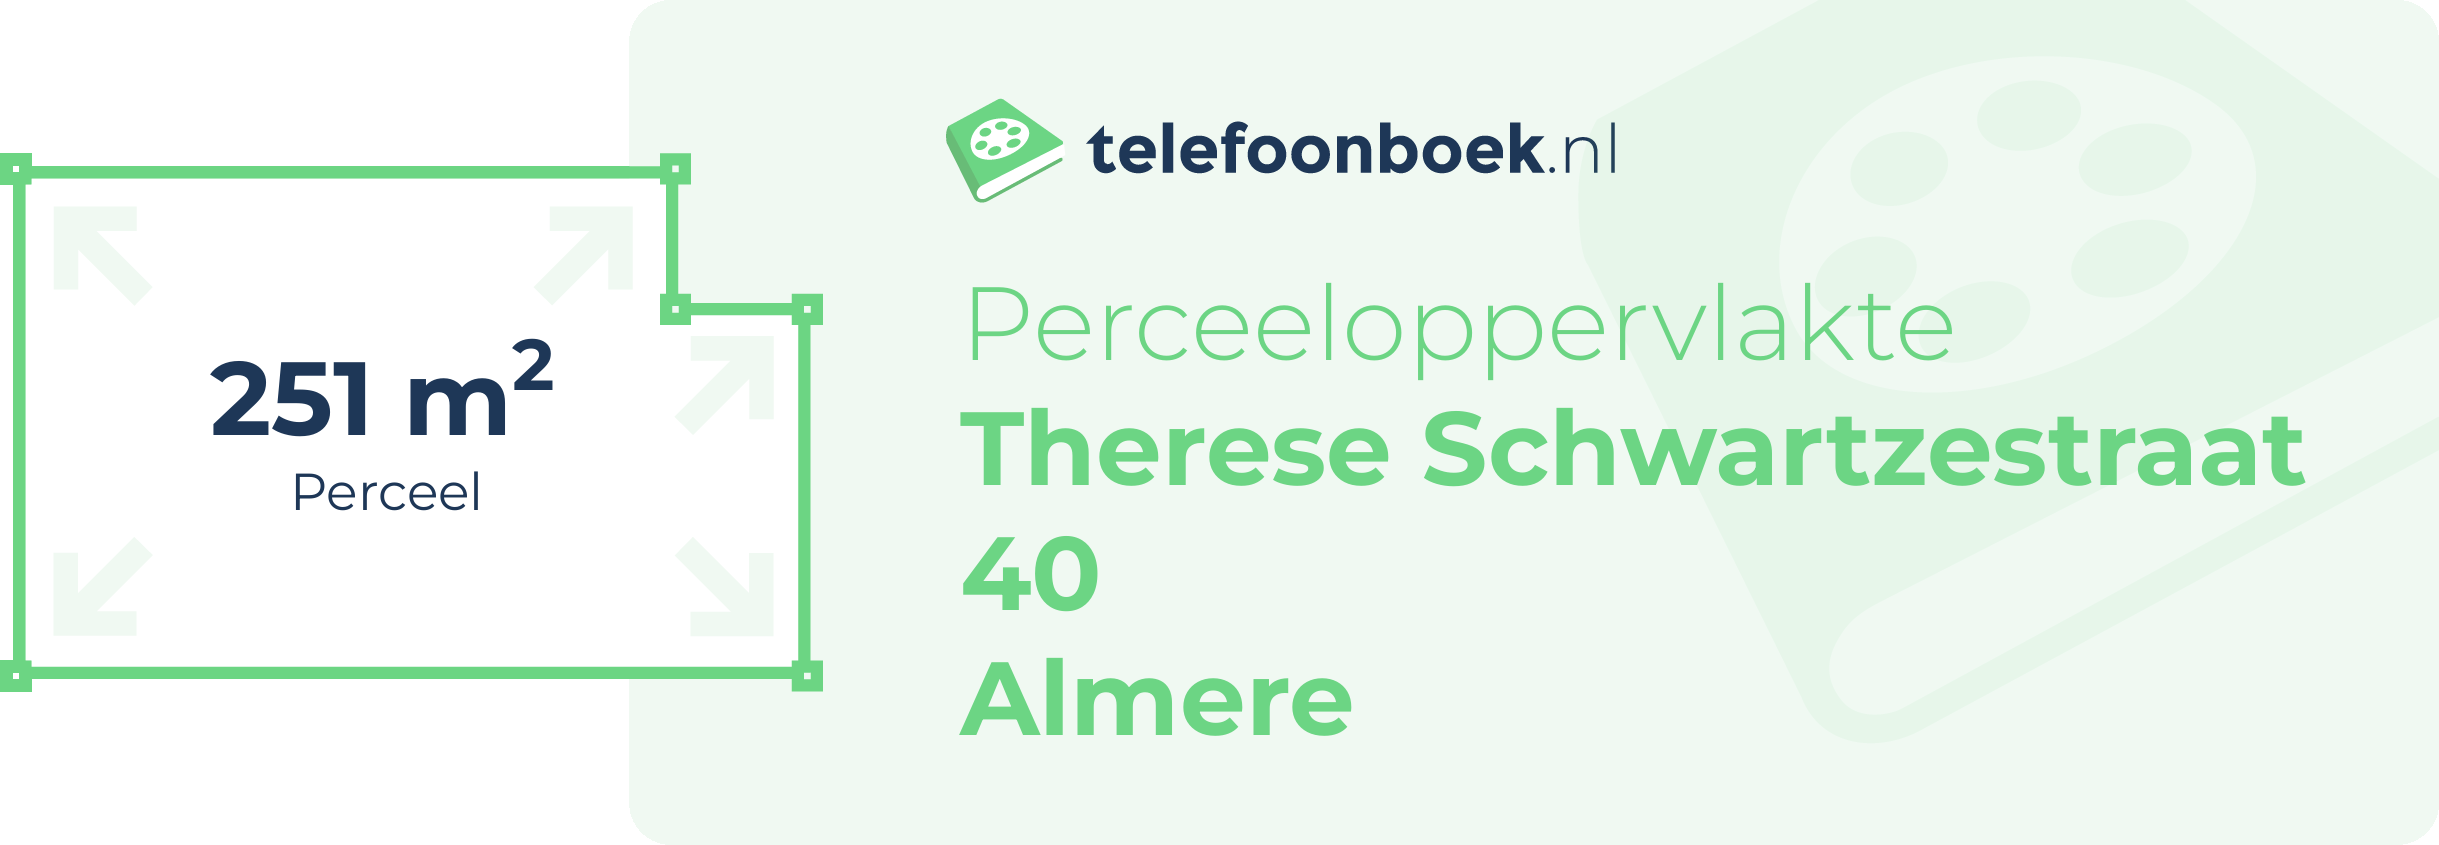 Perceeloppervlakte Therese Schwartzestraat 40 Almere